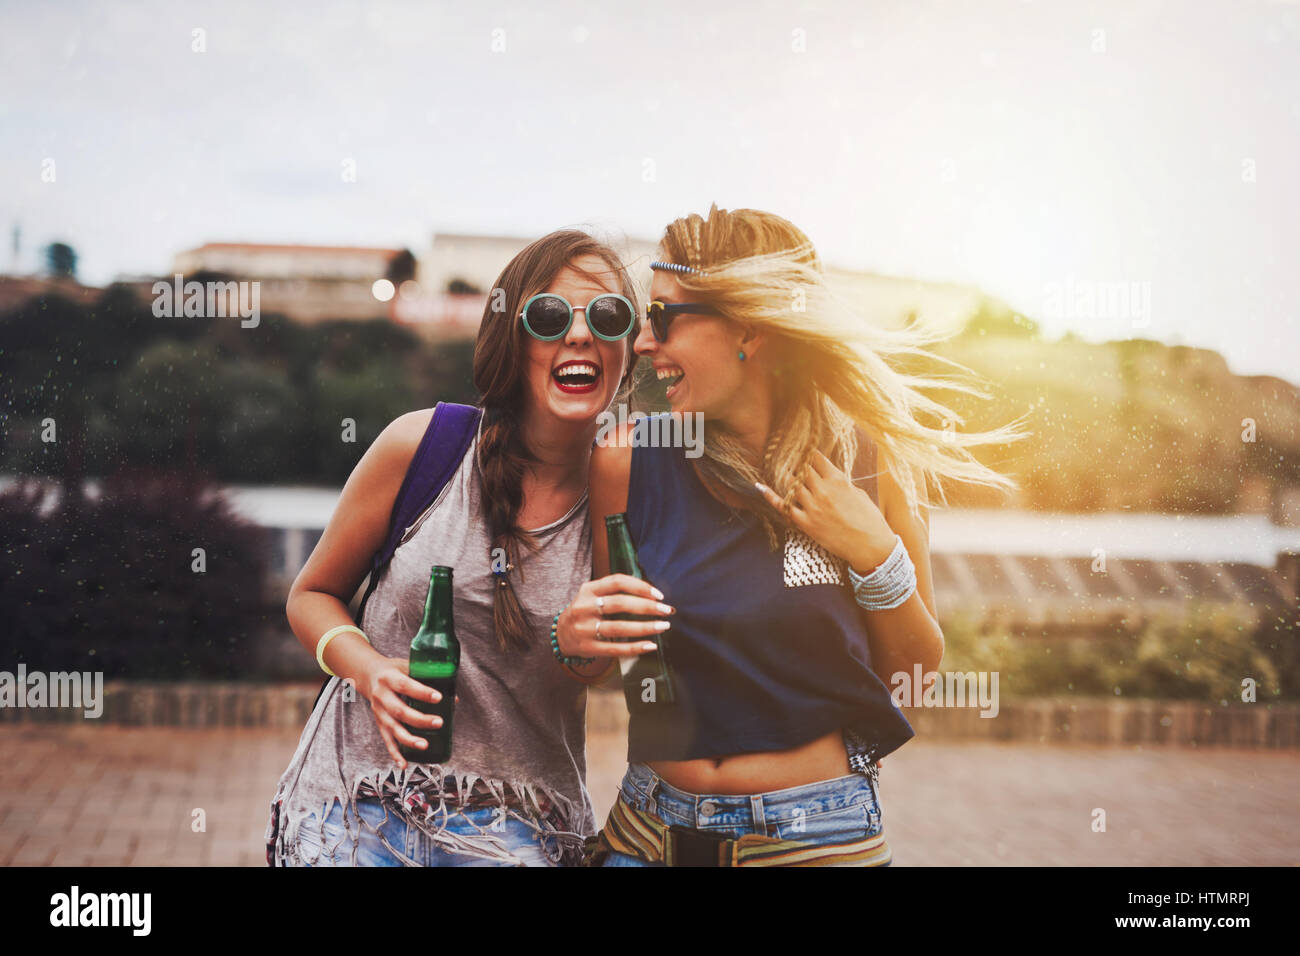 Party girls enjoying summer freedom and festival fun Stock Photo